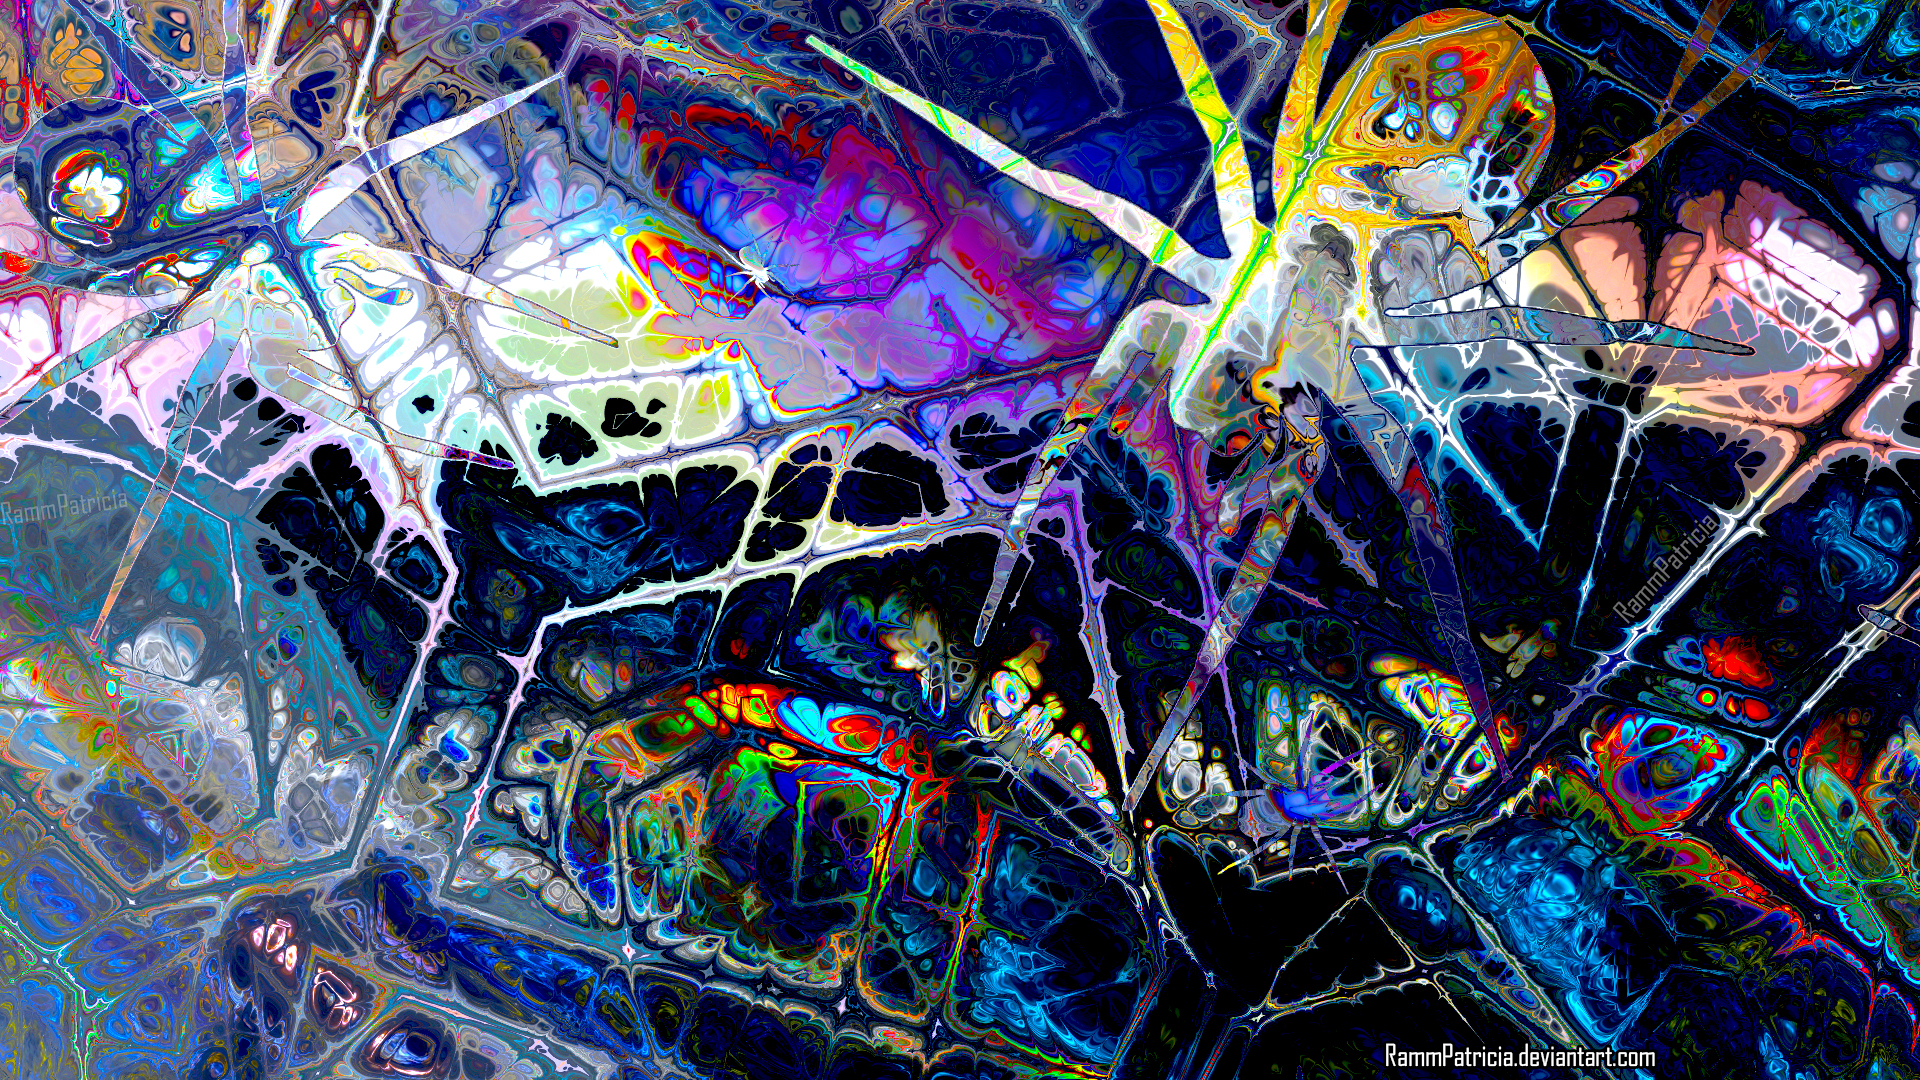 Wallpaper, RammPatricia, digital art, abstract, colorful, spider, tarantula, iridescent 1920x1080